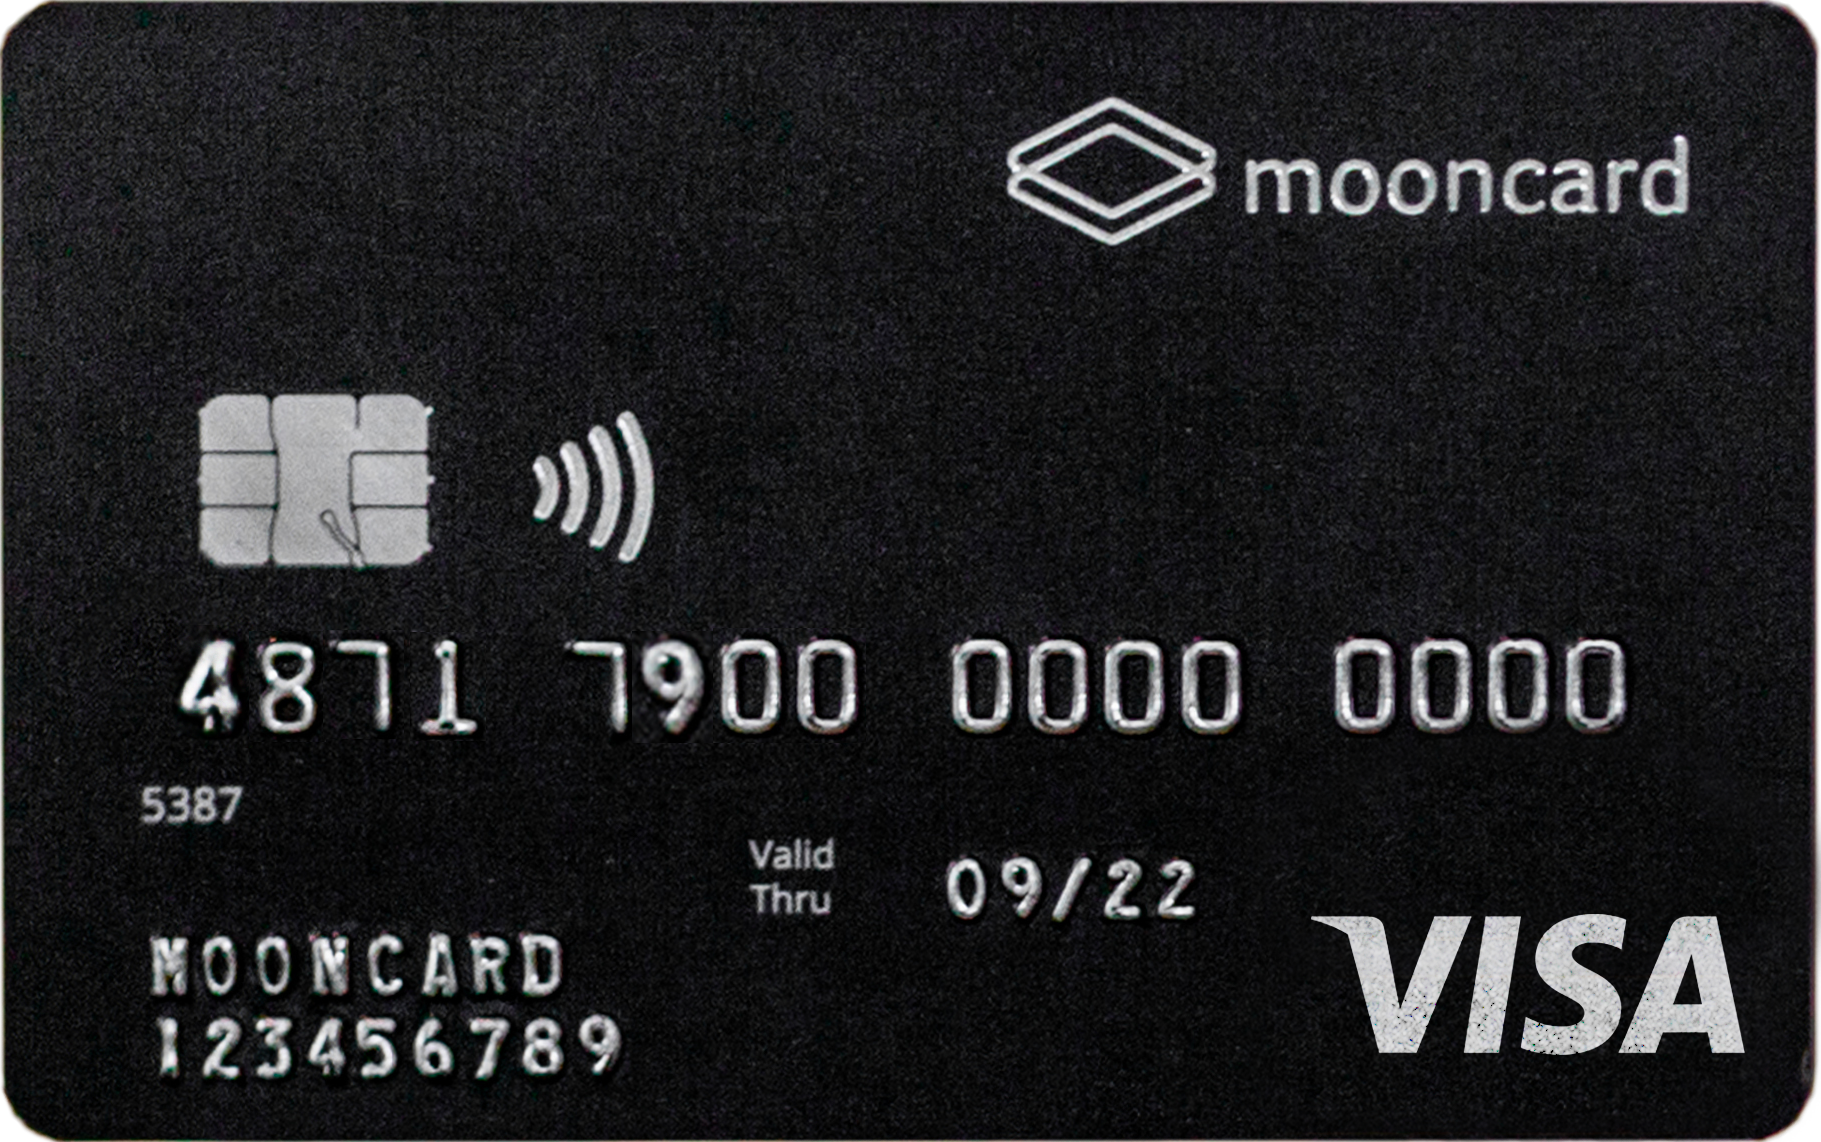 moodcard carte bancaire